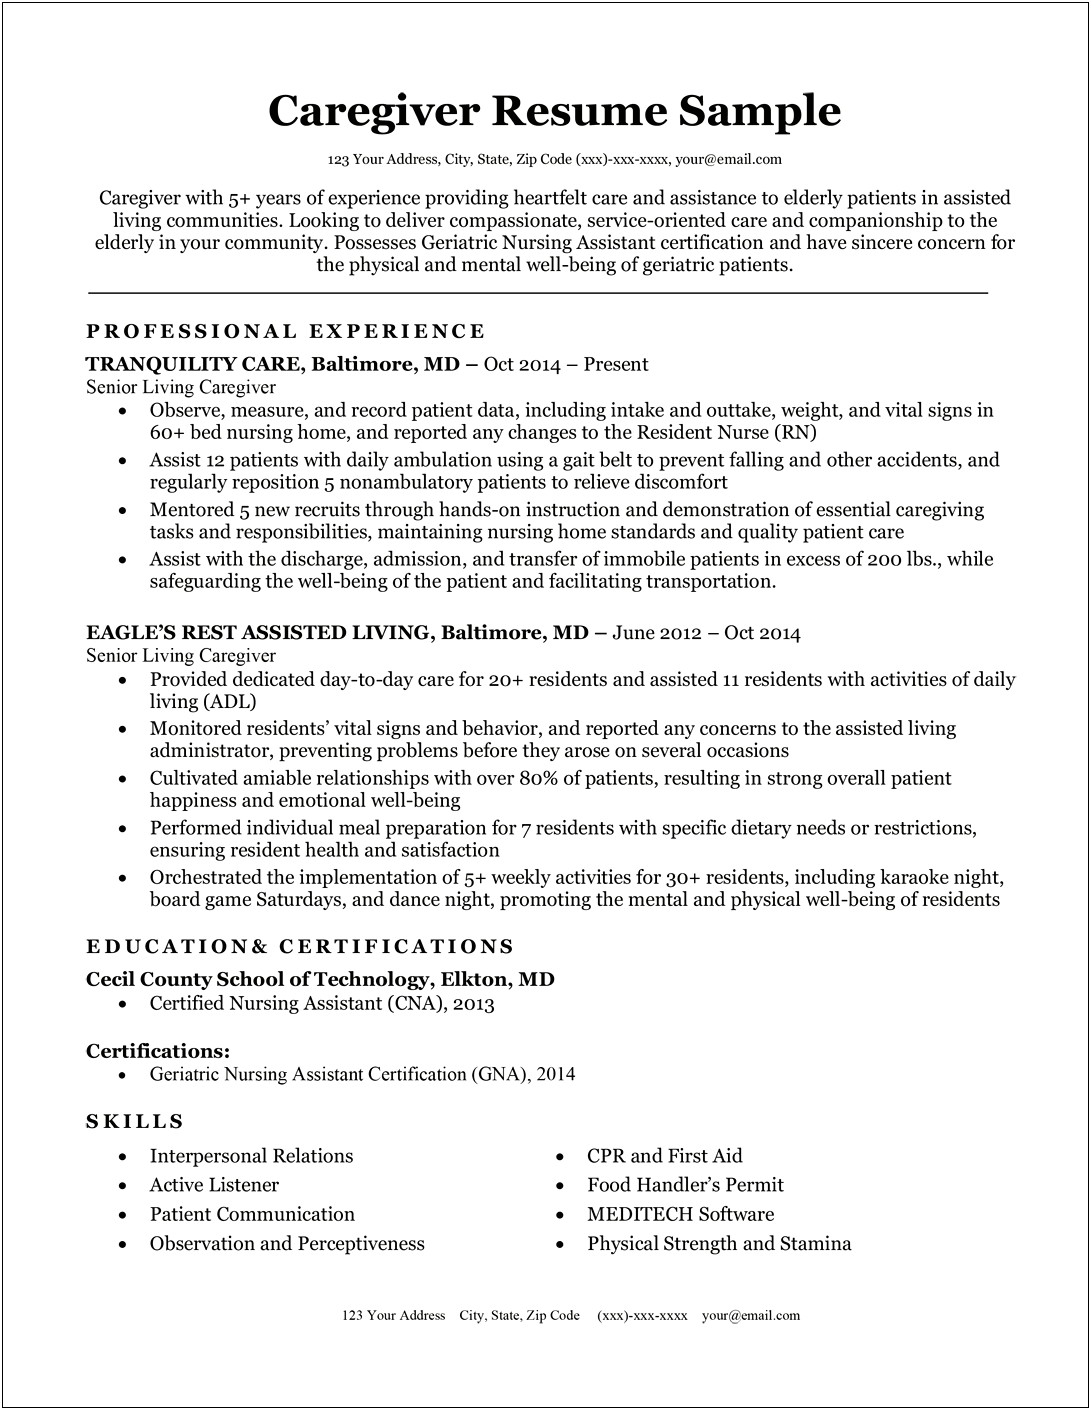 Objective For Resume For Nursing Assistant